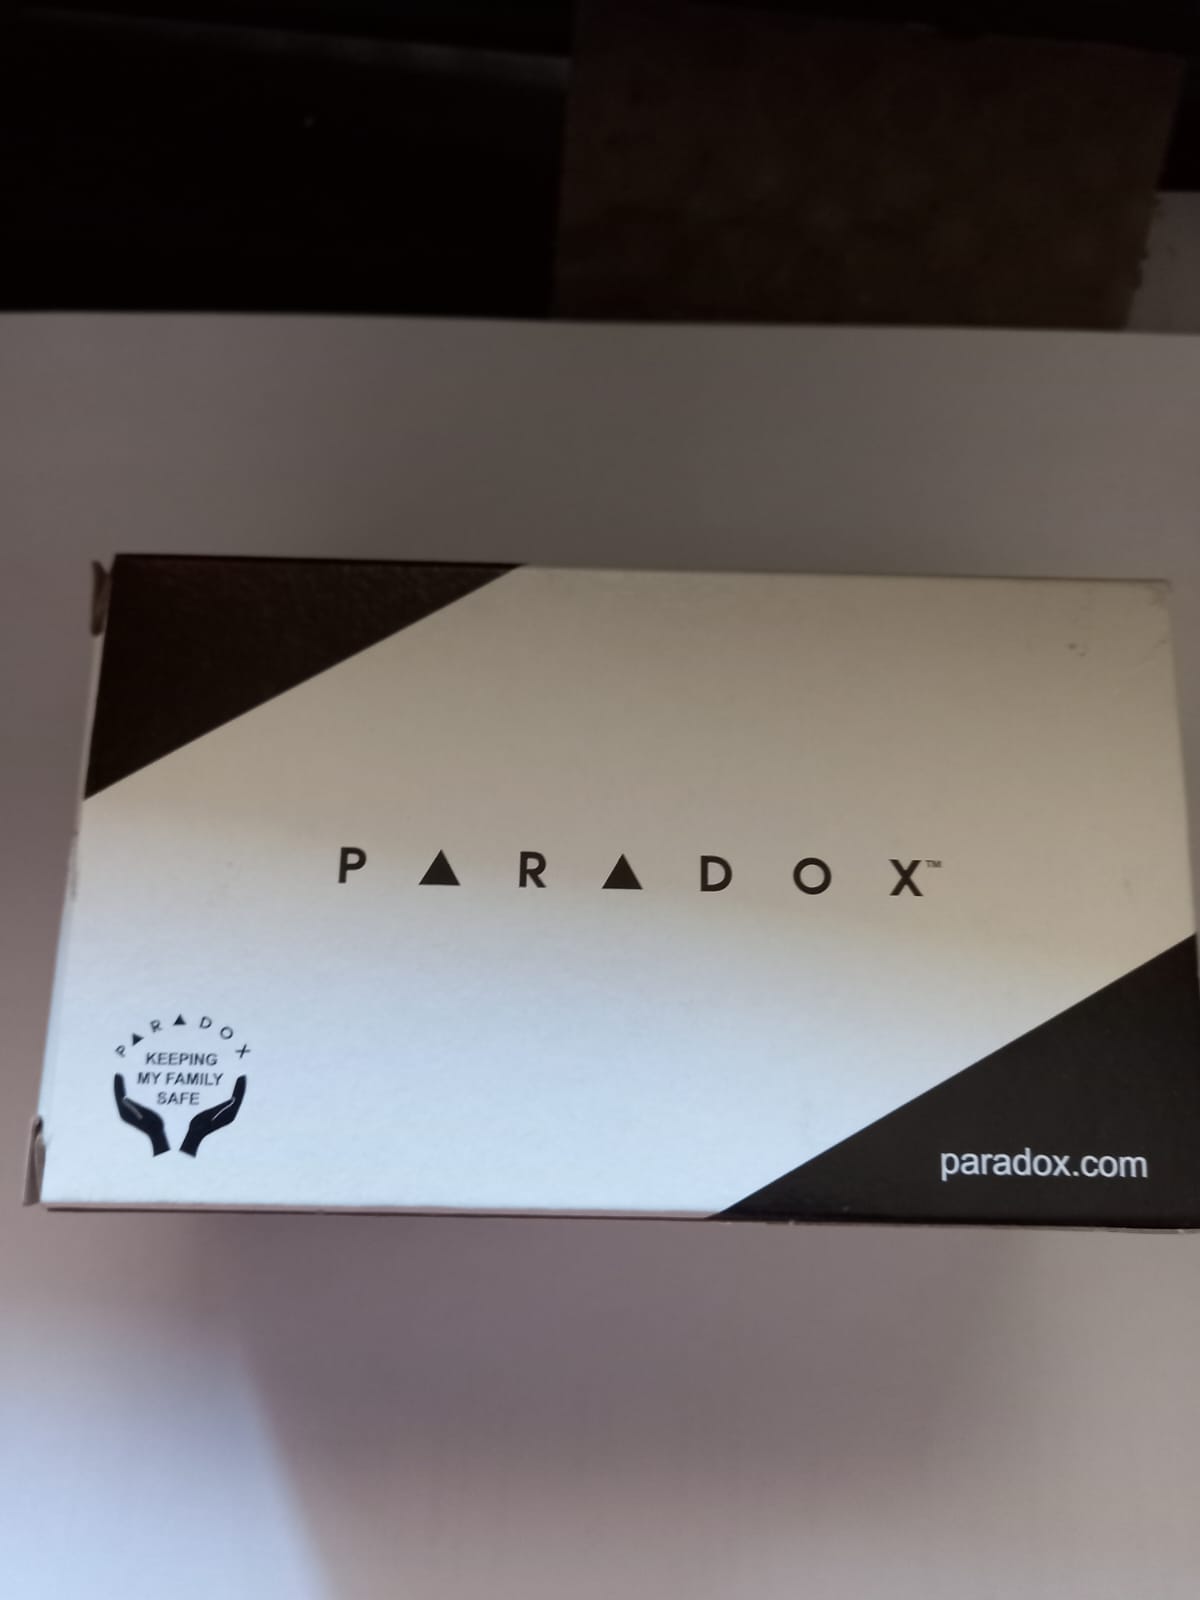 Paradox PMD75 Digital Dual-Optic High-Performance PIR - 433Mhz(40kg True Pet Imm